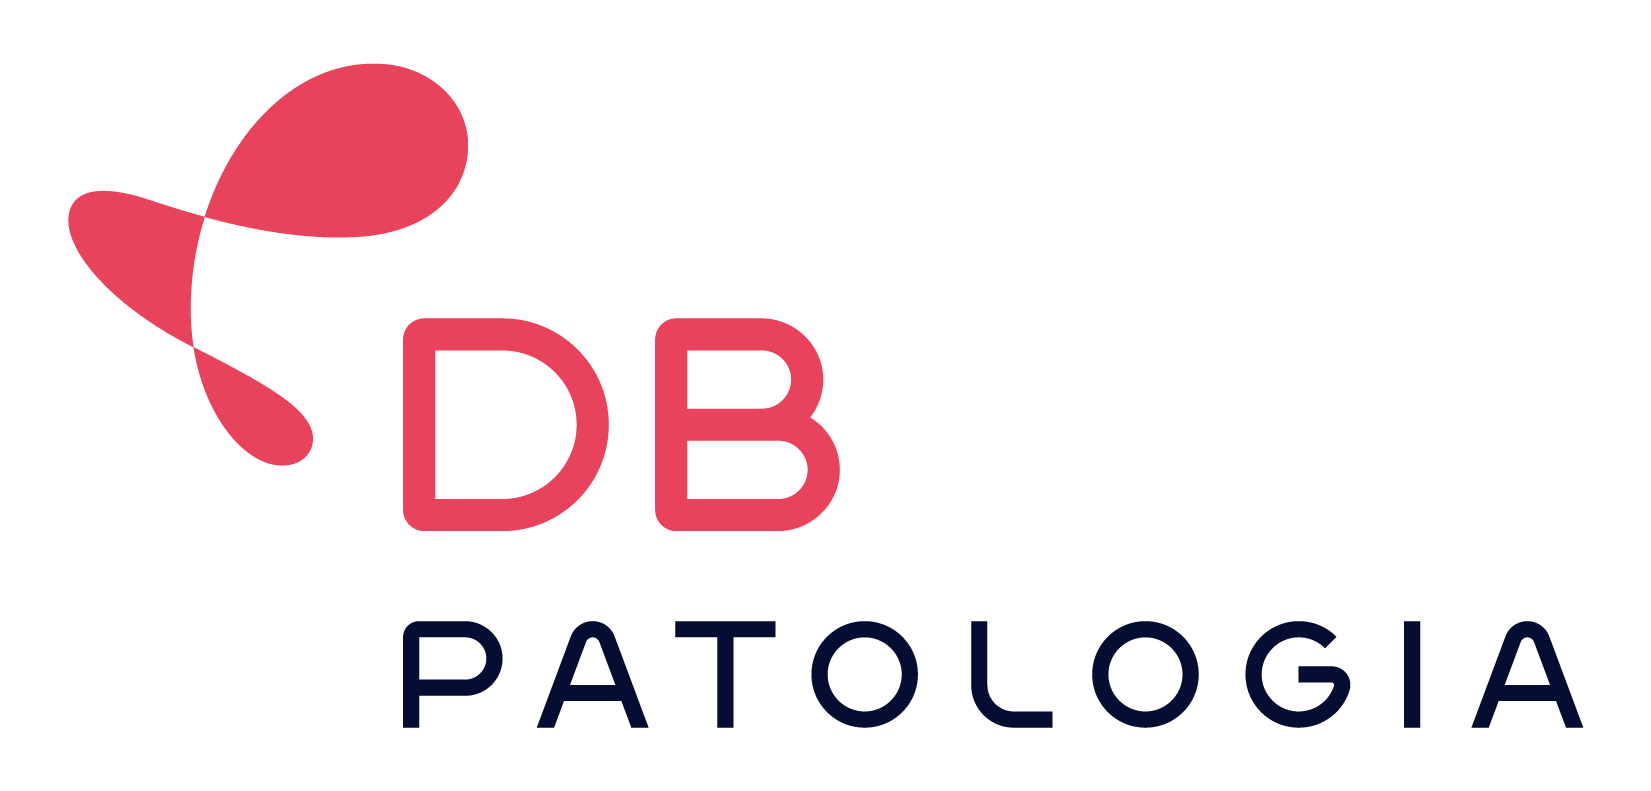 DB Patologia